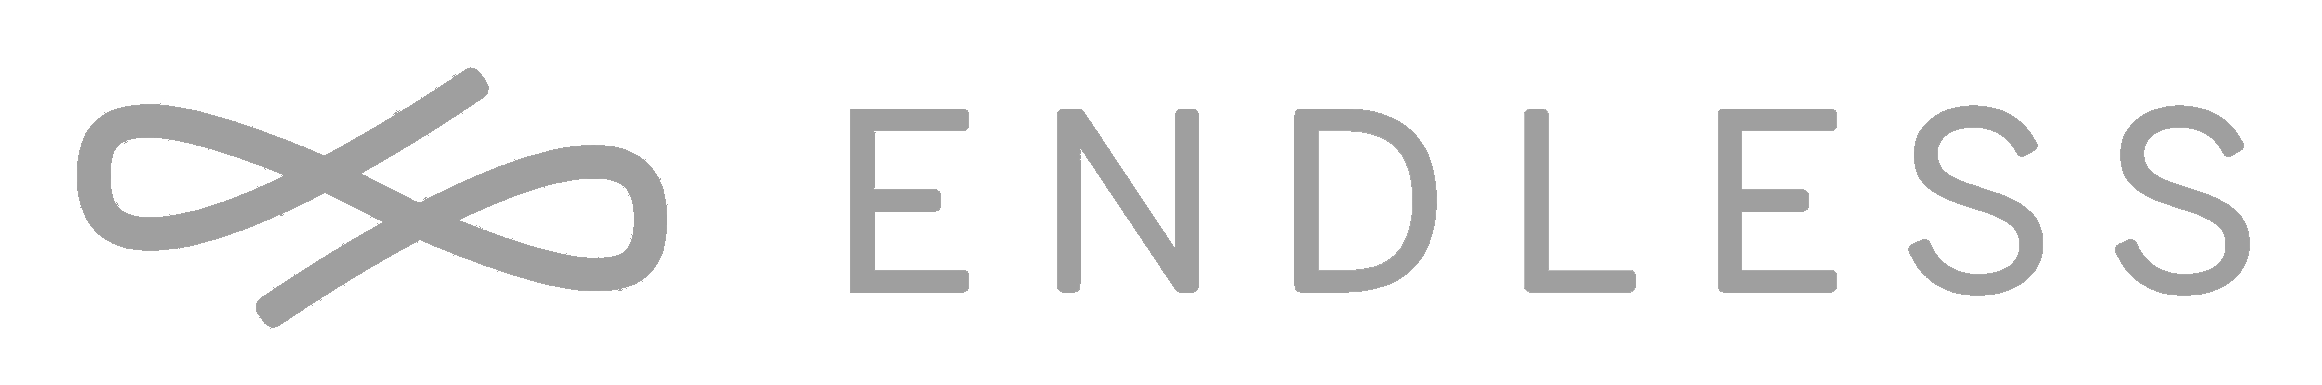 Endless Logo